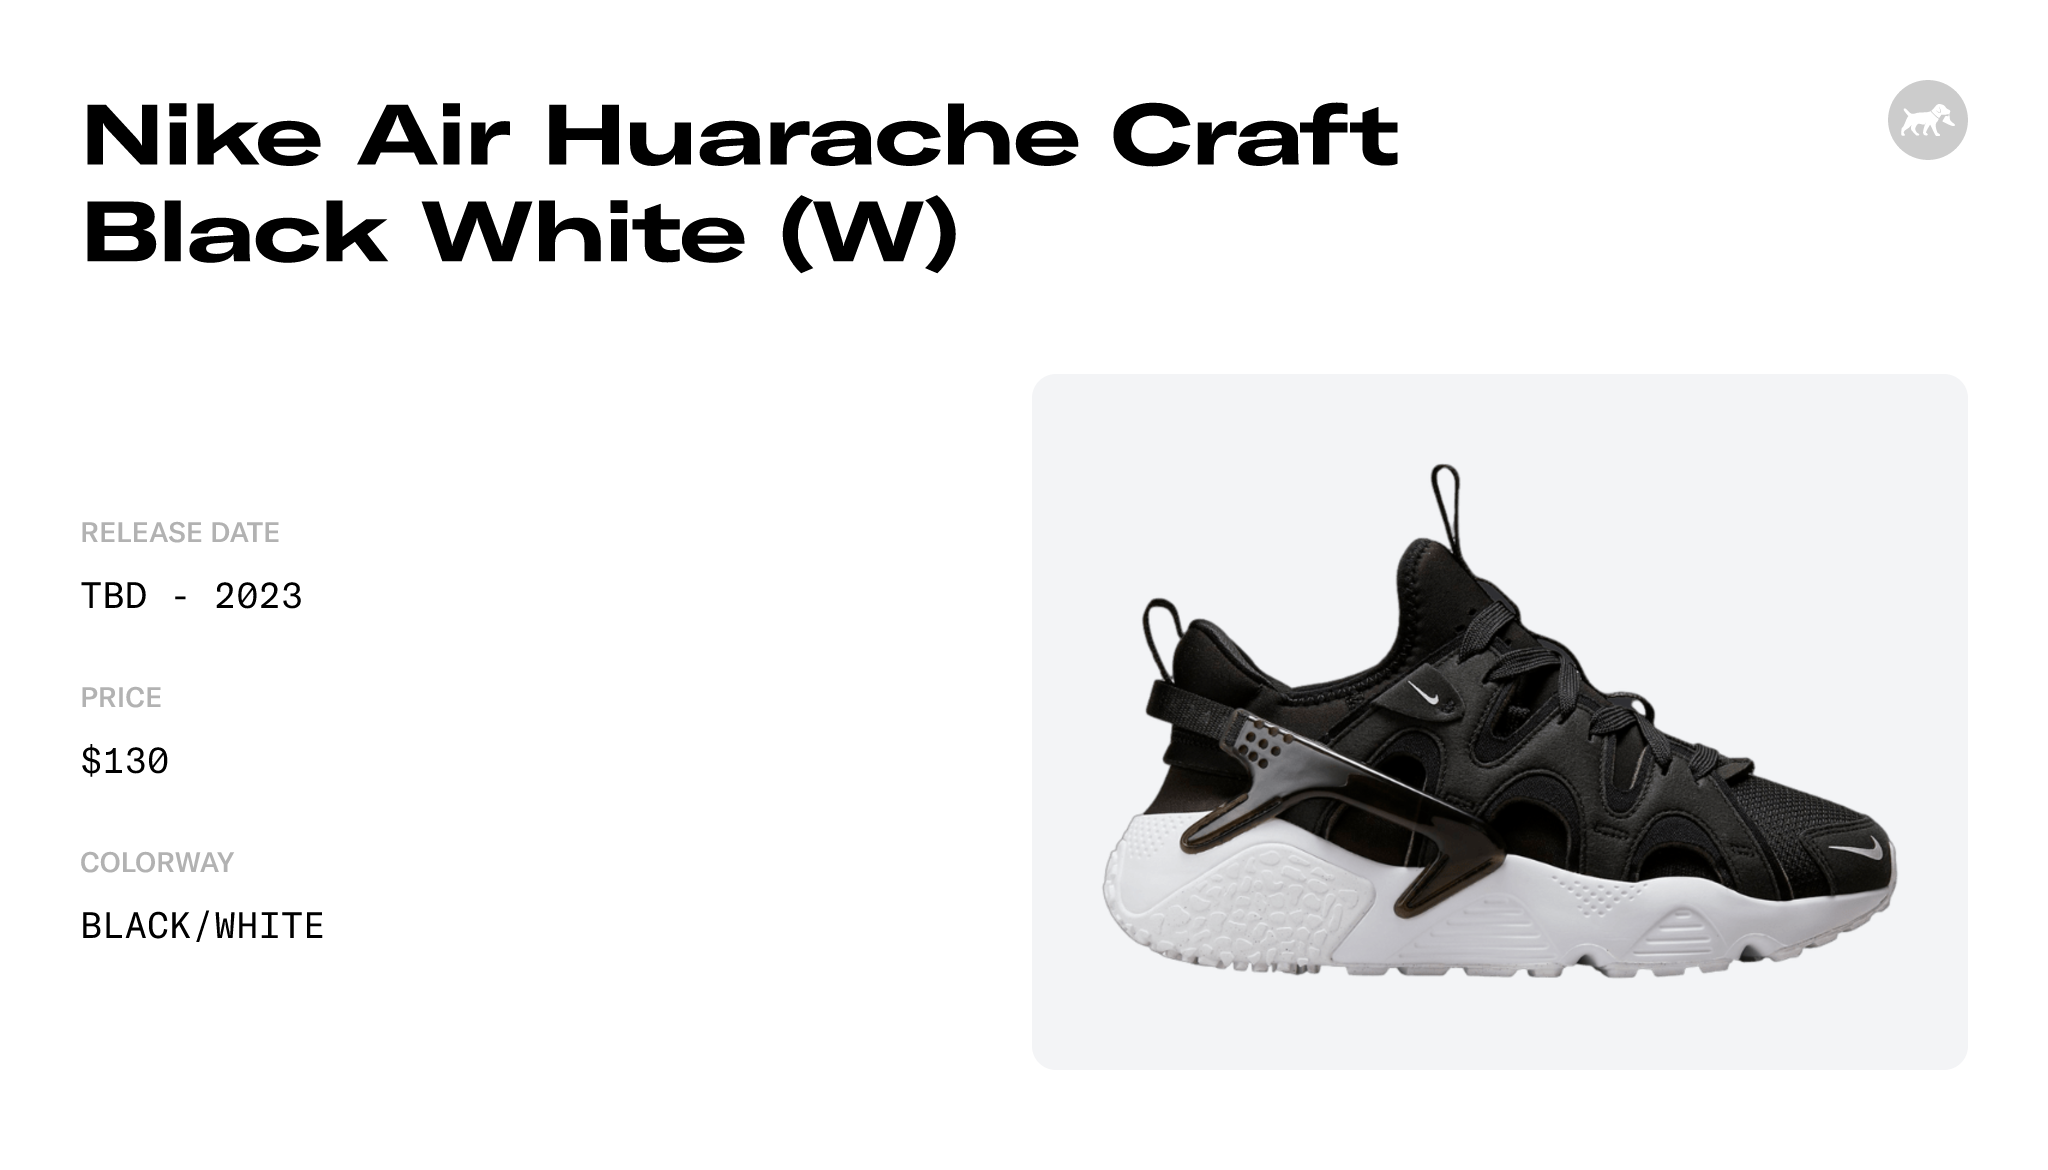 Nike Air Huarache Craft Native Tribal (W) Raffles and Release Date